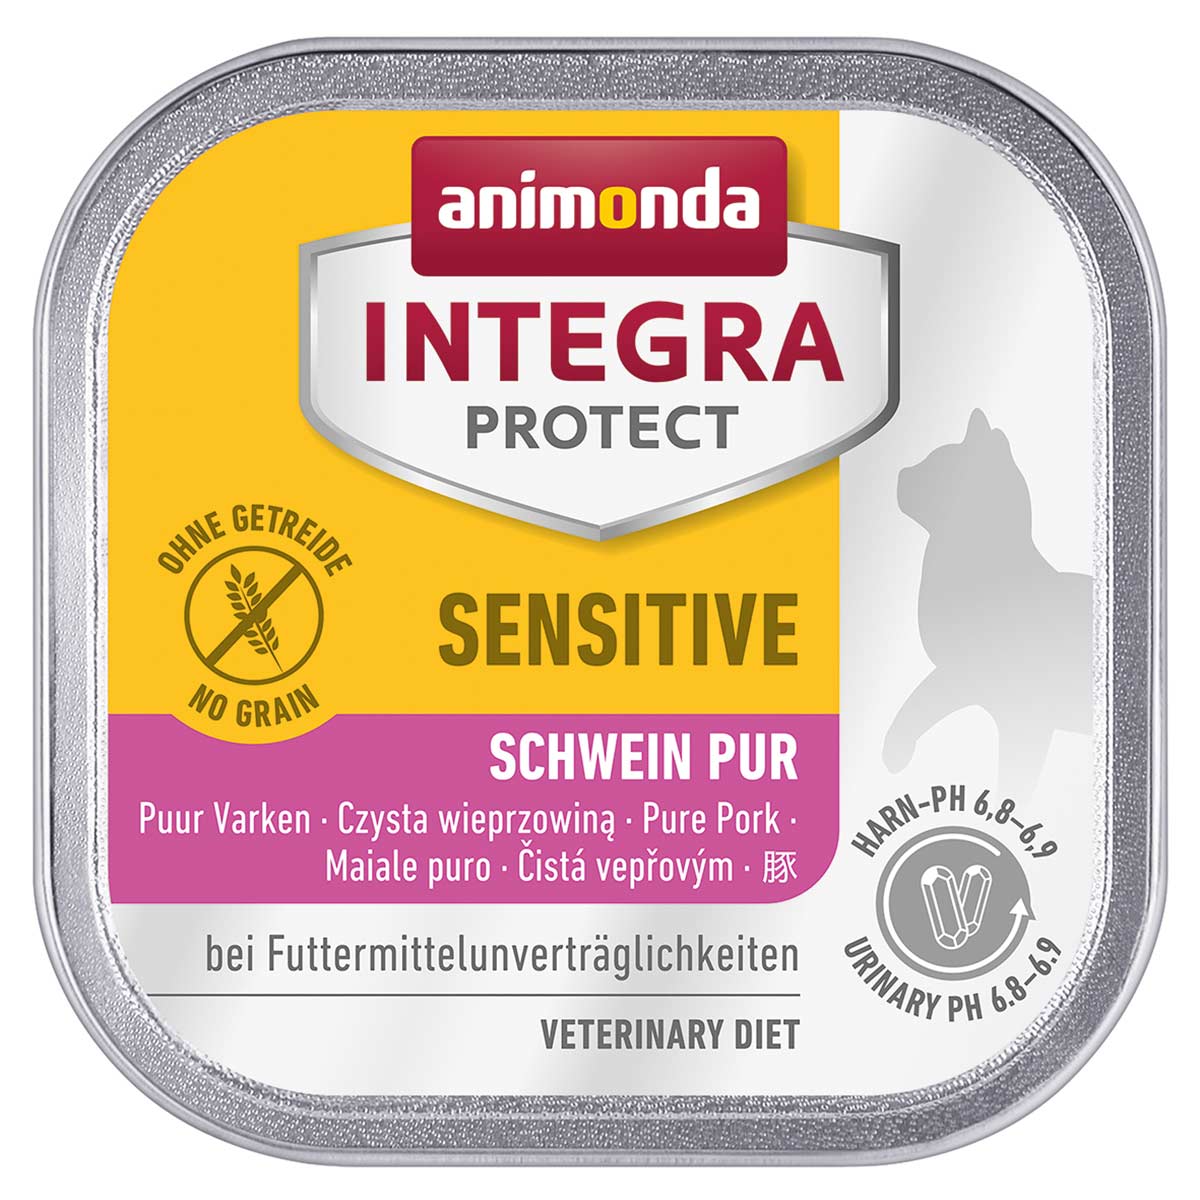 animonda INTEGRA PROTECT Sensitive Schwein pur 32x100g von animonda Integra Protect